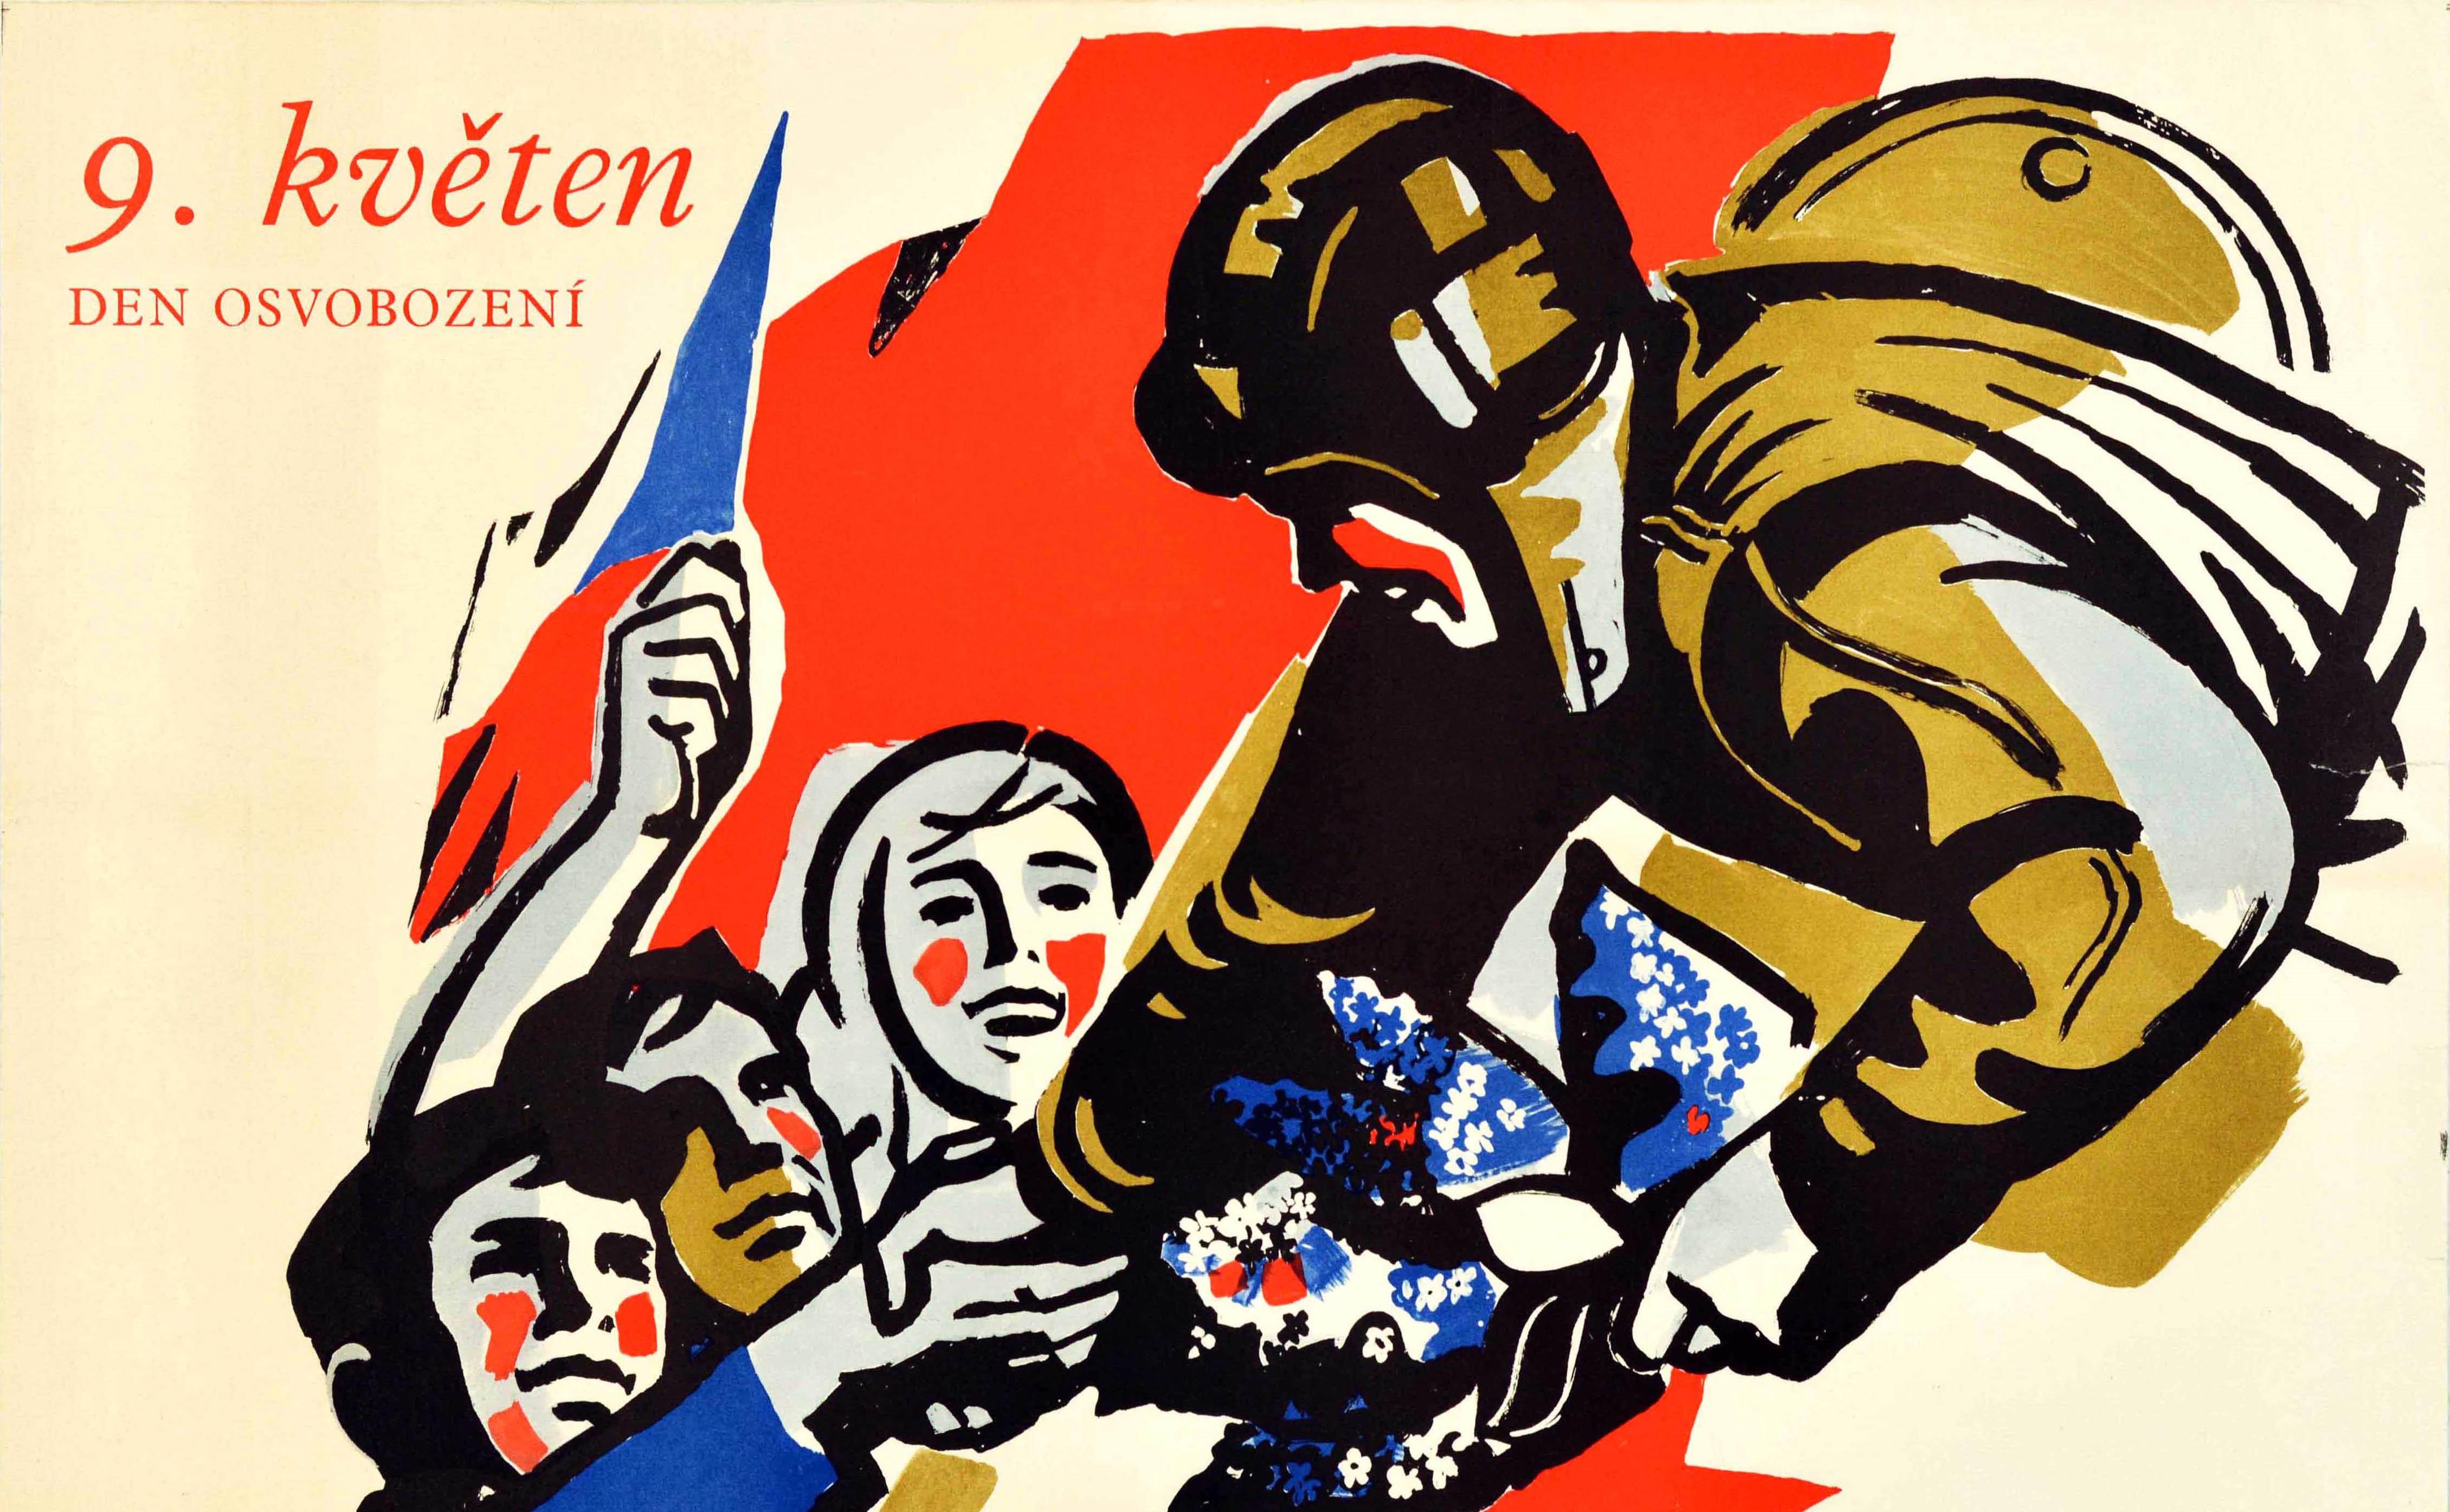 Original Vintage Poster May 9 Den Osvobozeni Freedom Day End WWII Czechoslovakia - Print by Unknown